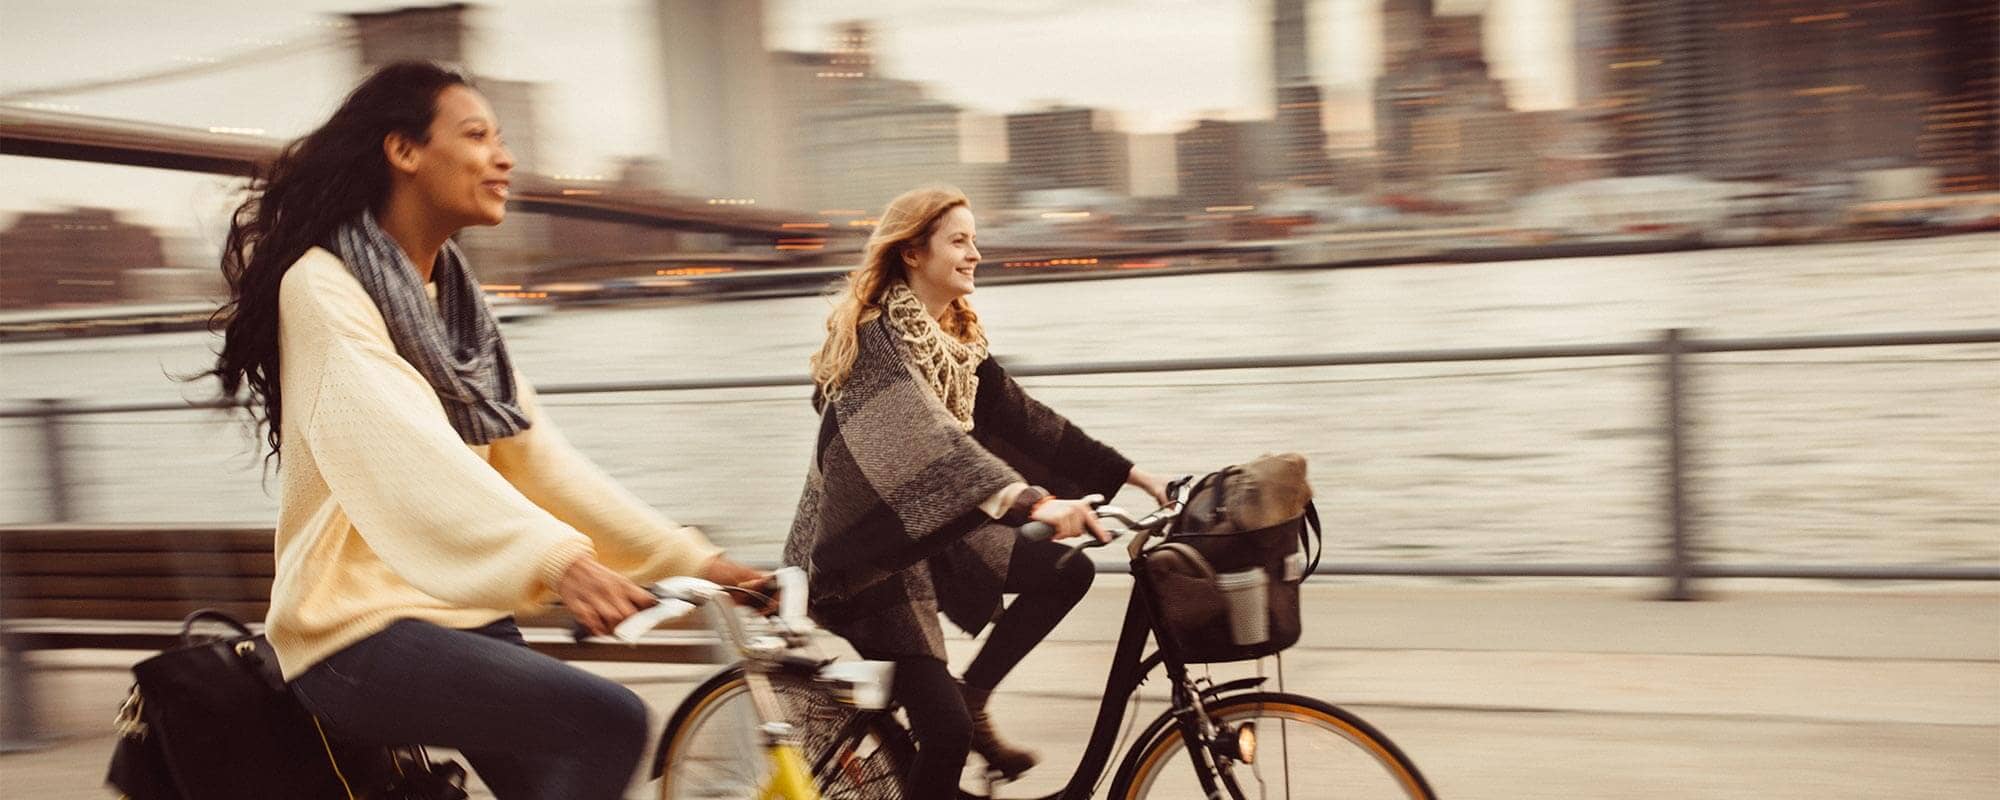 Travel nurses biking through the city